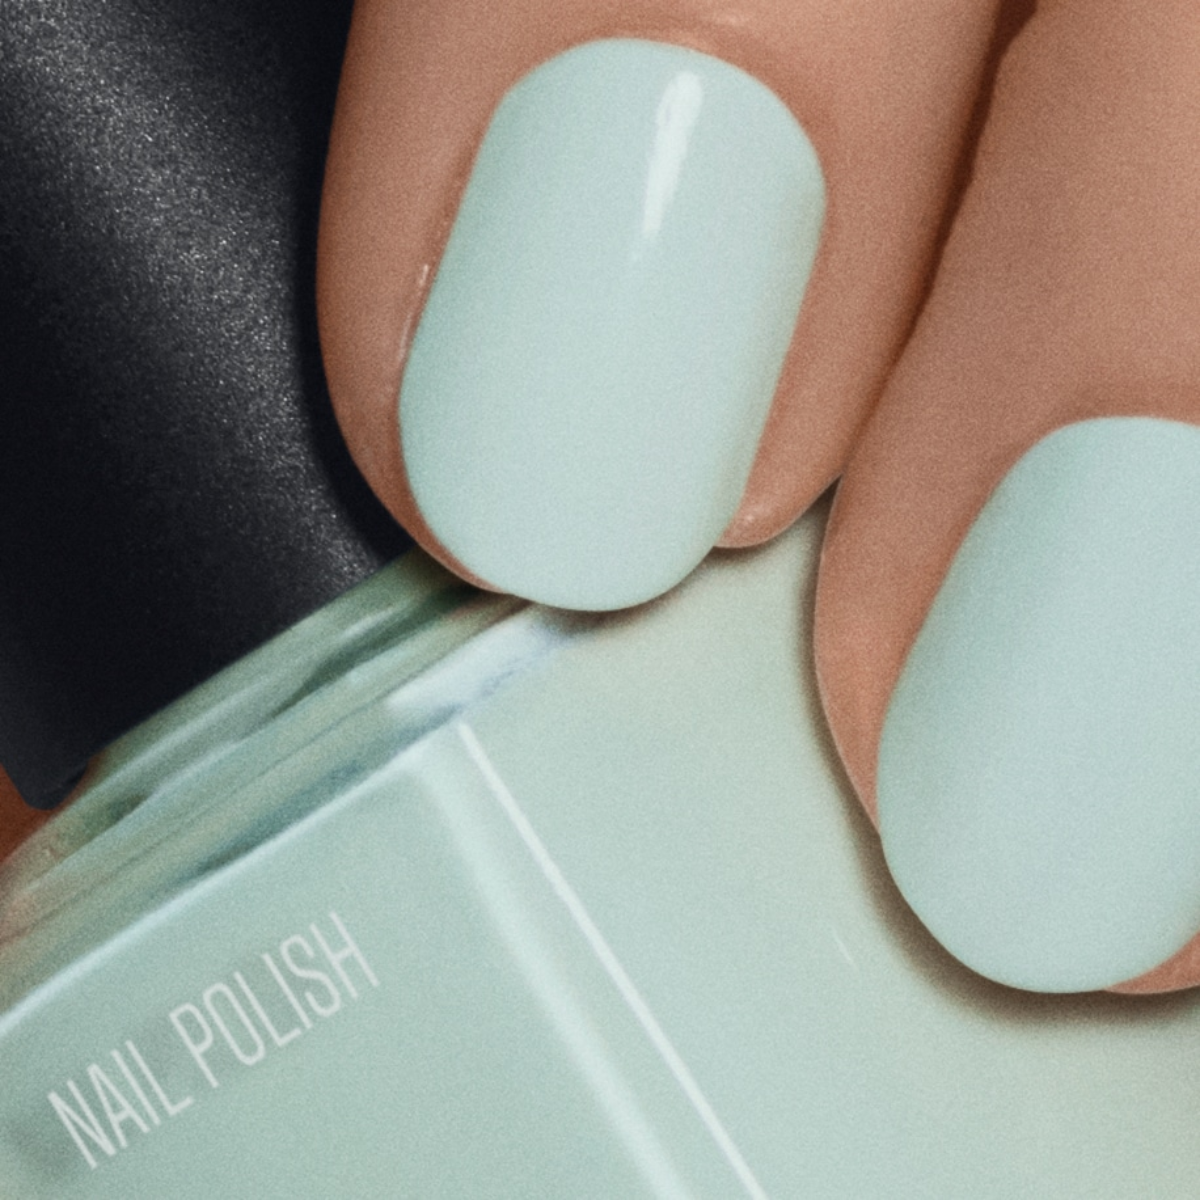 Nilens Jord - Nail Polish – Pastel Blue